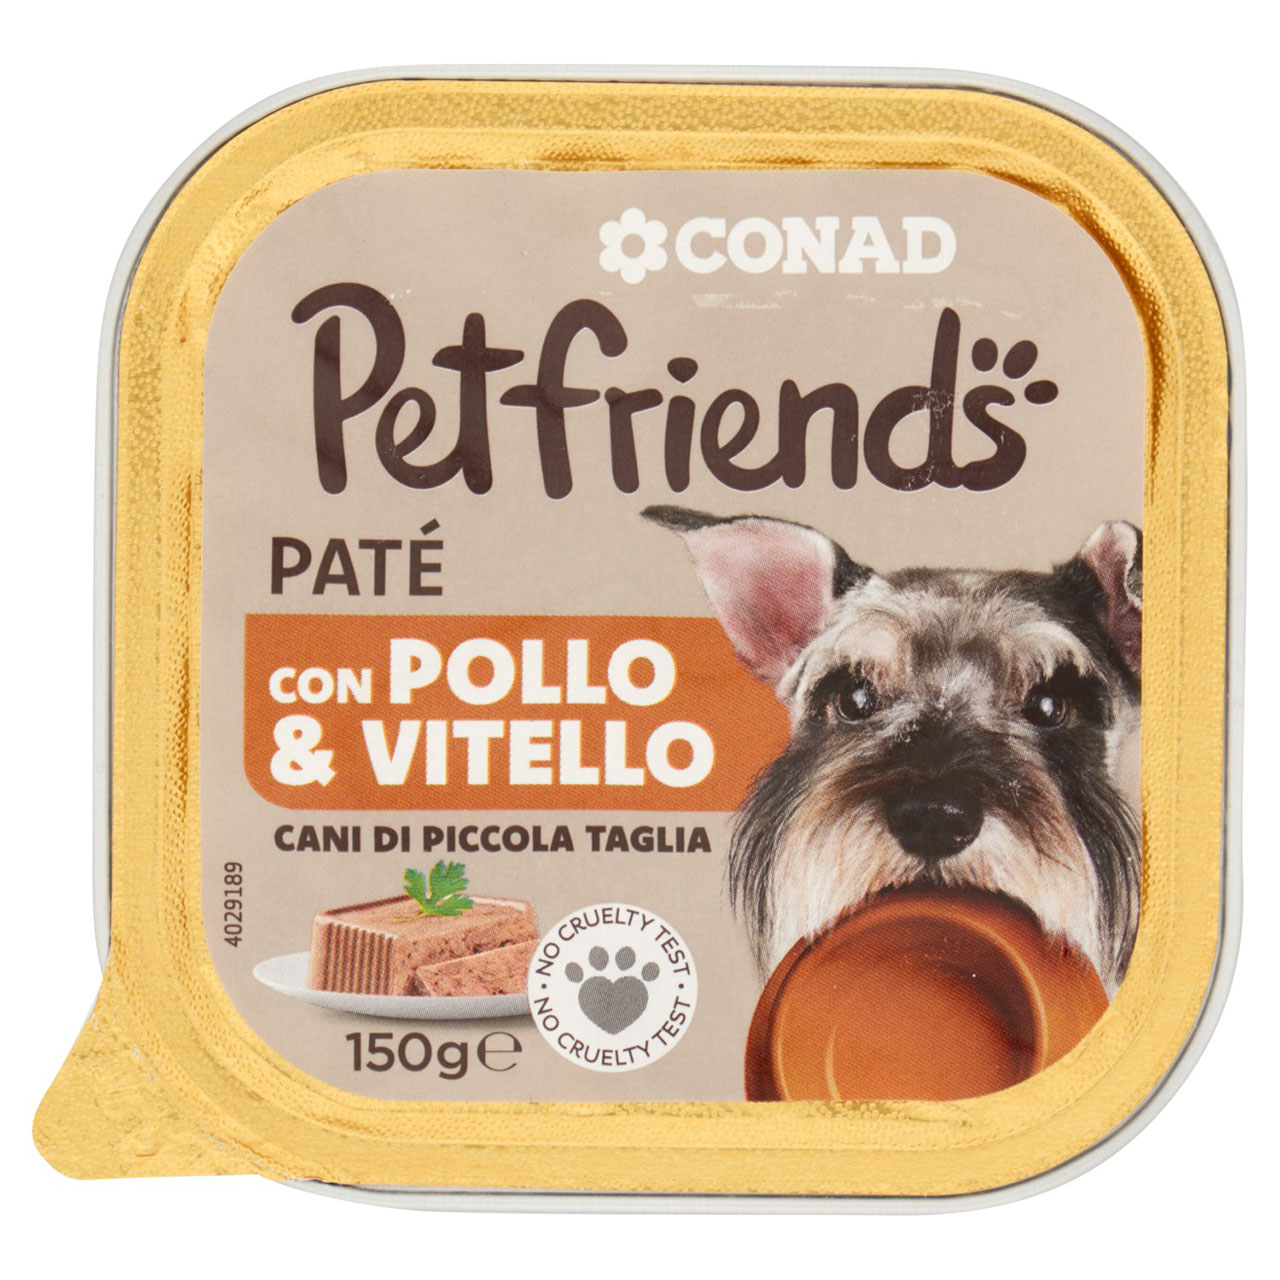 Petfriends Pat� Pollo & Vitello 150g Conad online